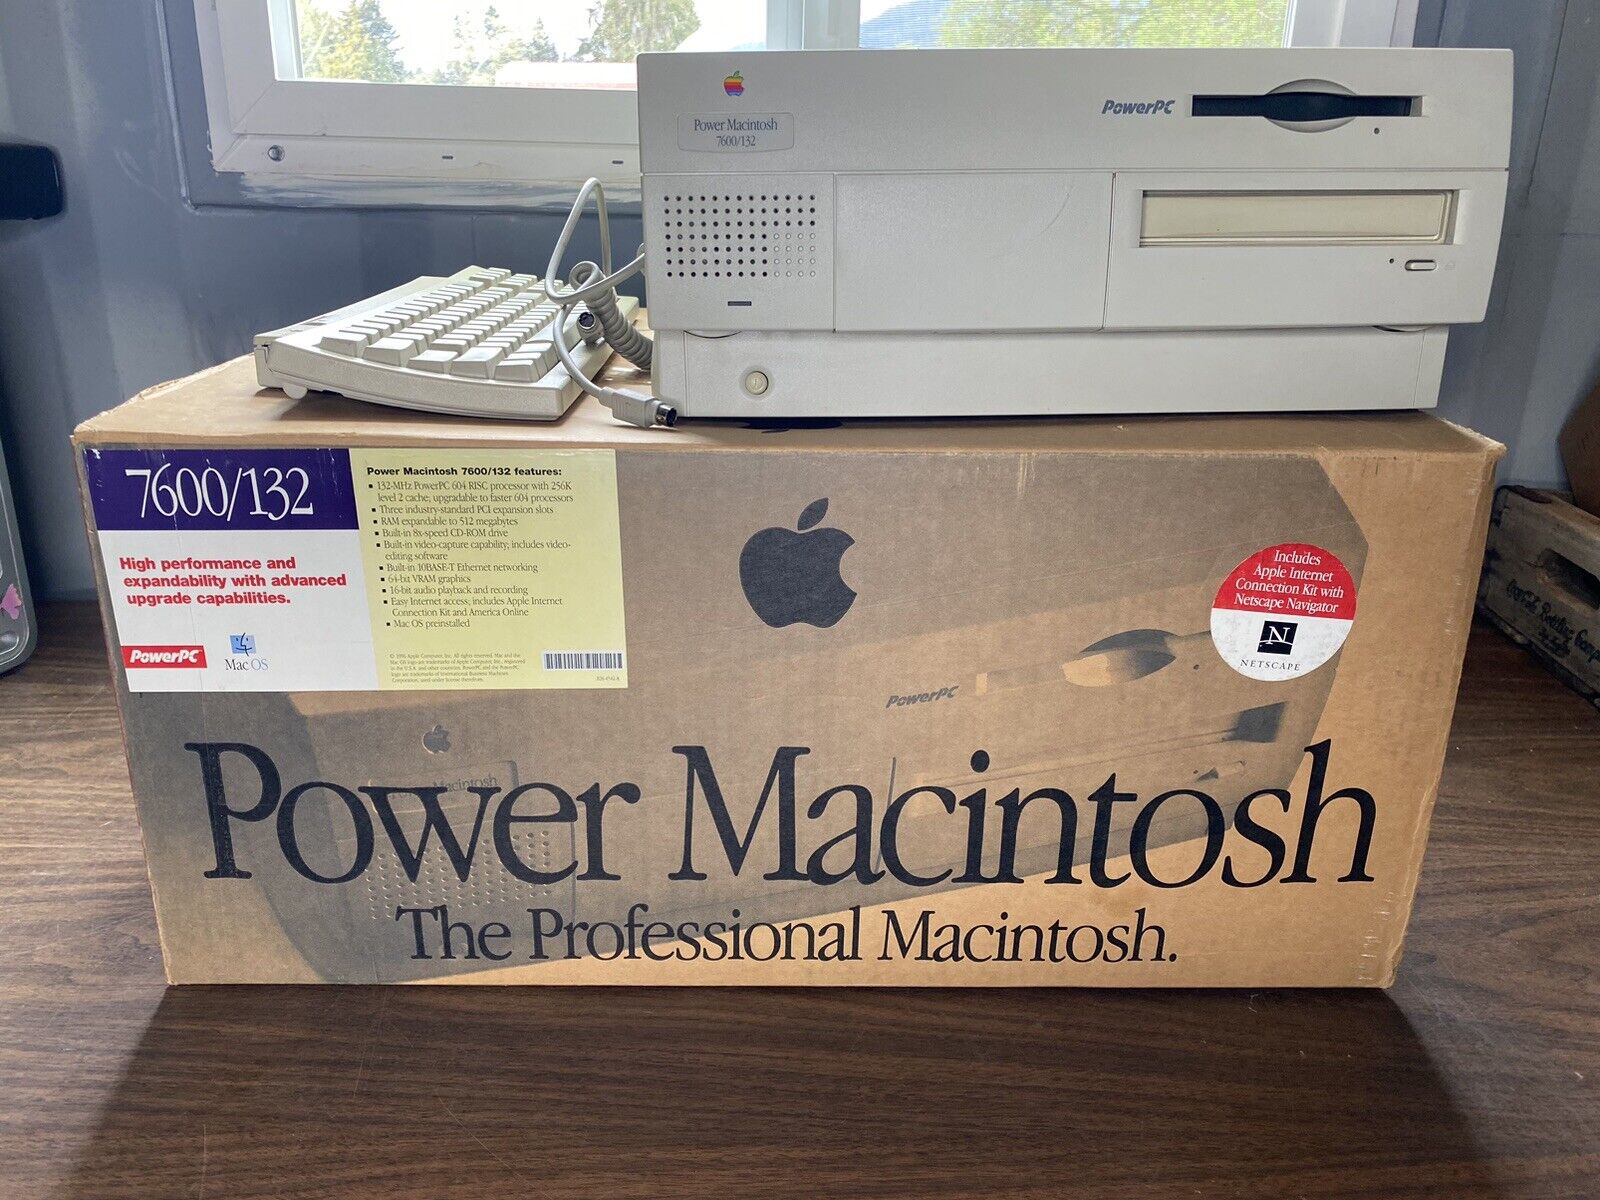 Vintage Apple Power Macintosh 7600/132 PowerPC Computer M3979 W Box And Keyboard